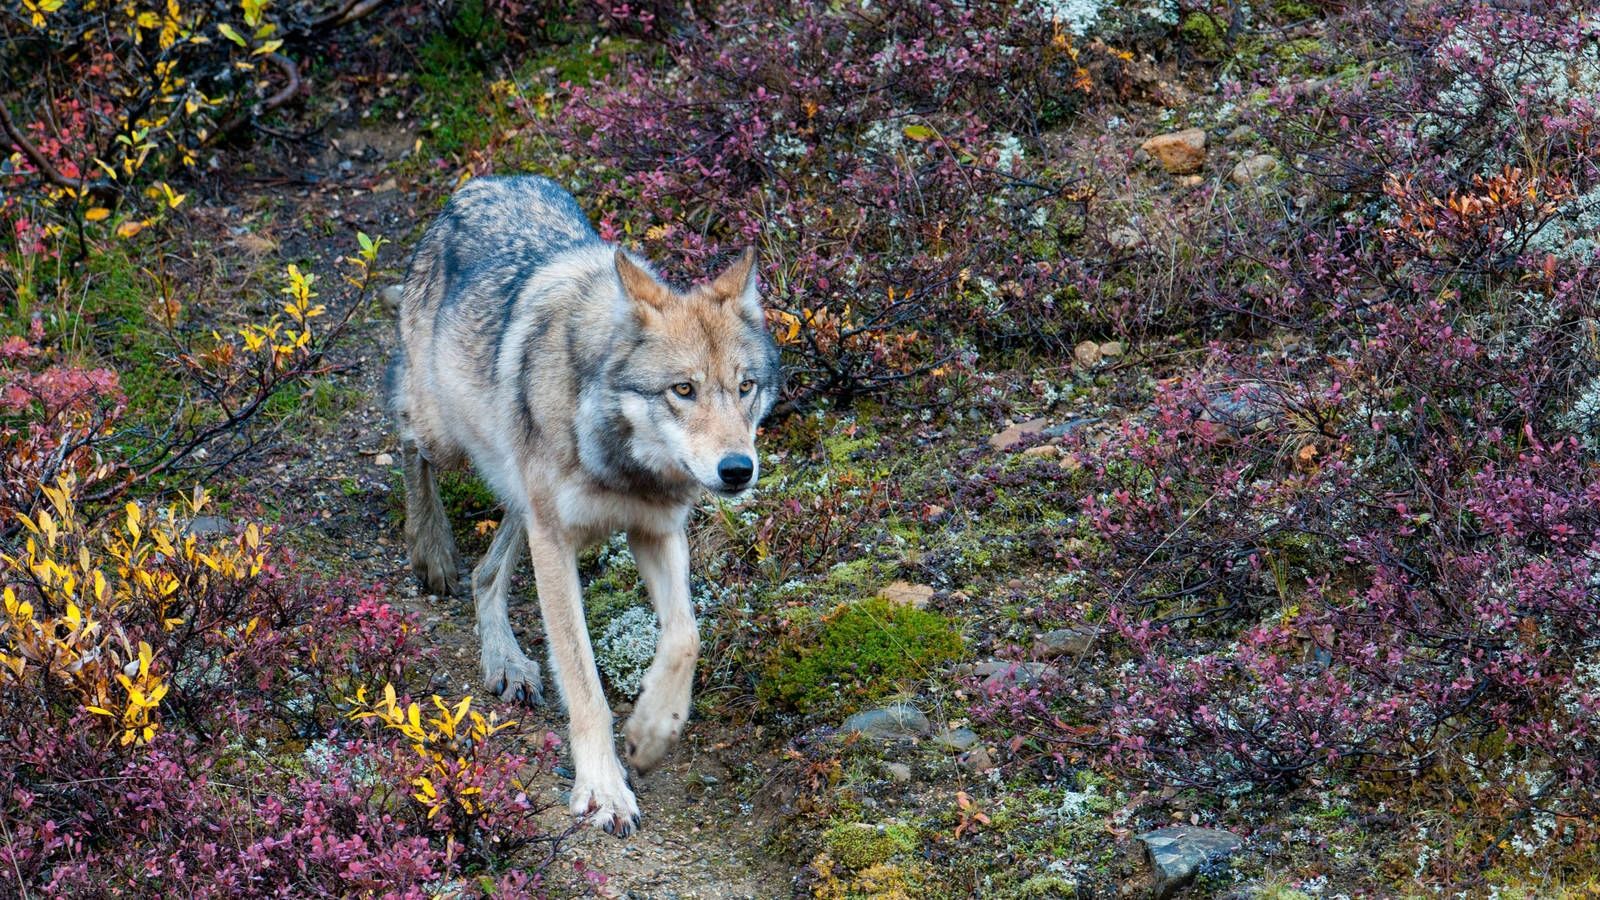 https://www.npca.org/articles/1433-denali-s-wolves-should-be-seen-not-hunted